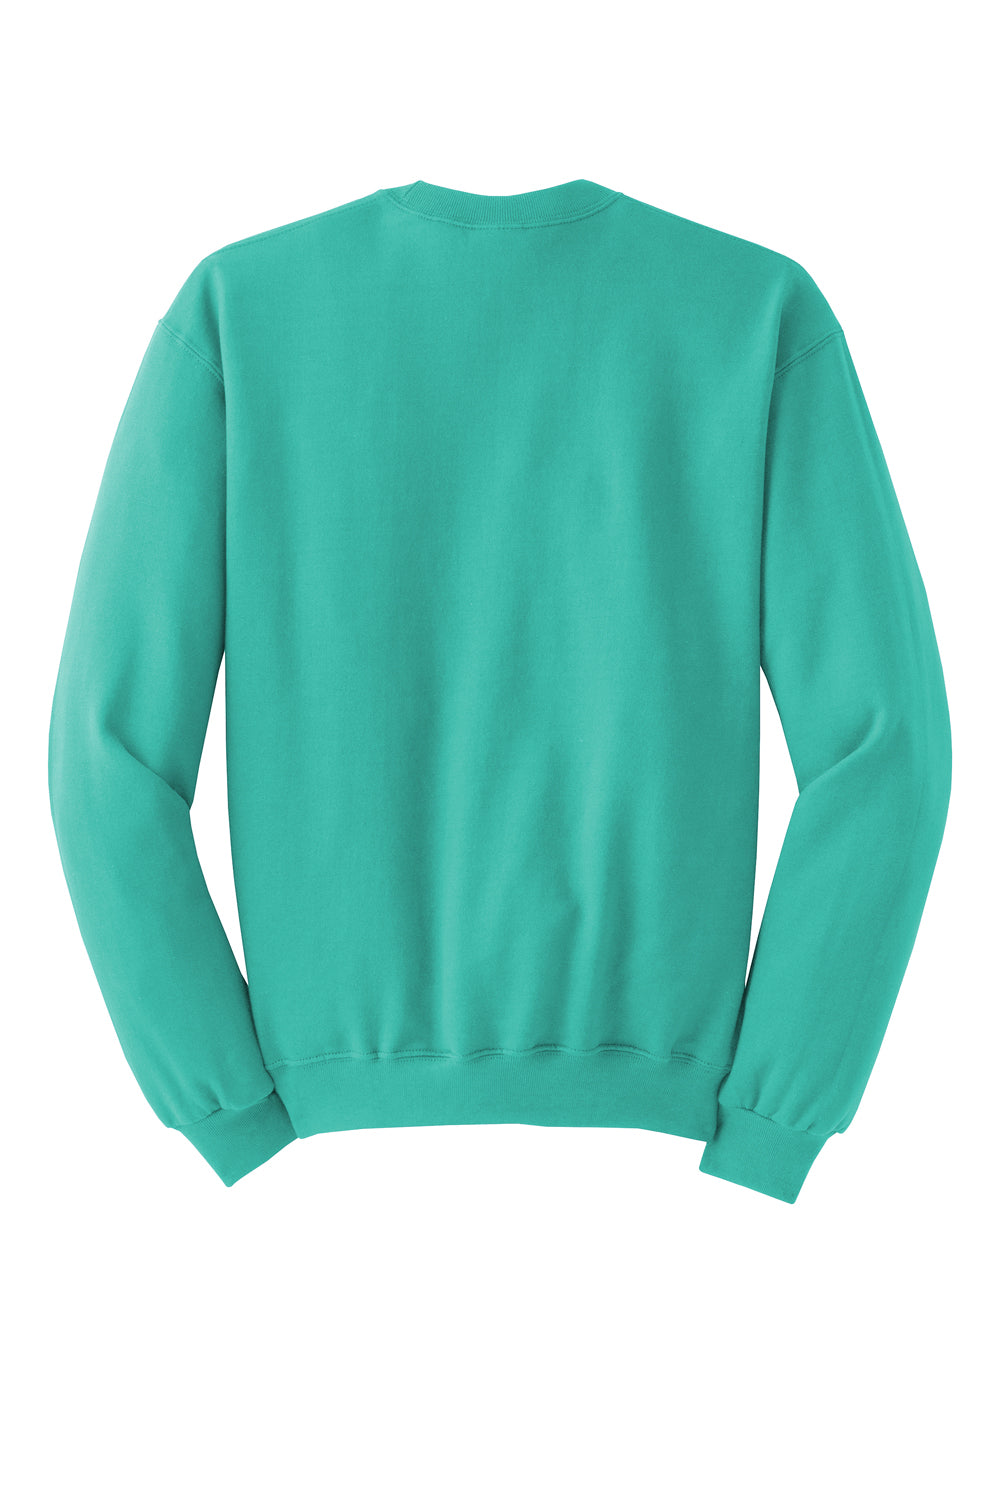 Jerzees 562M/562/562MR Mens NuBlend Fleece Crewneck Sweatshirt Cool Mint Flat Back